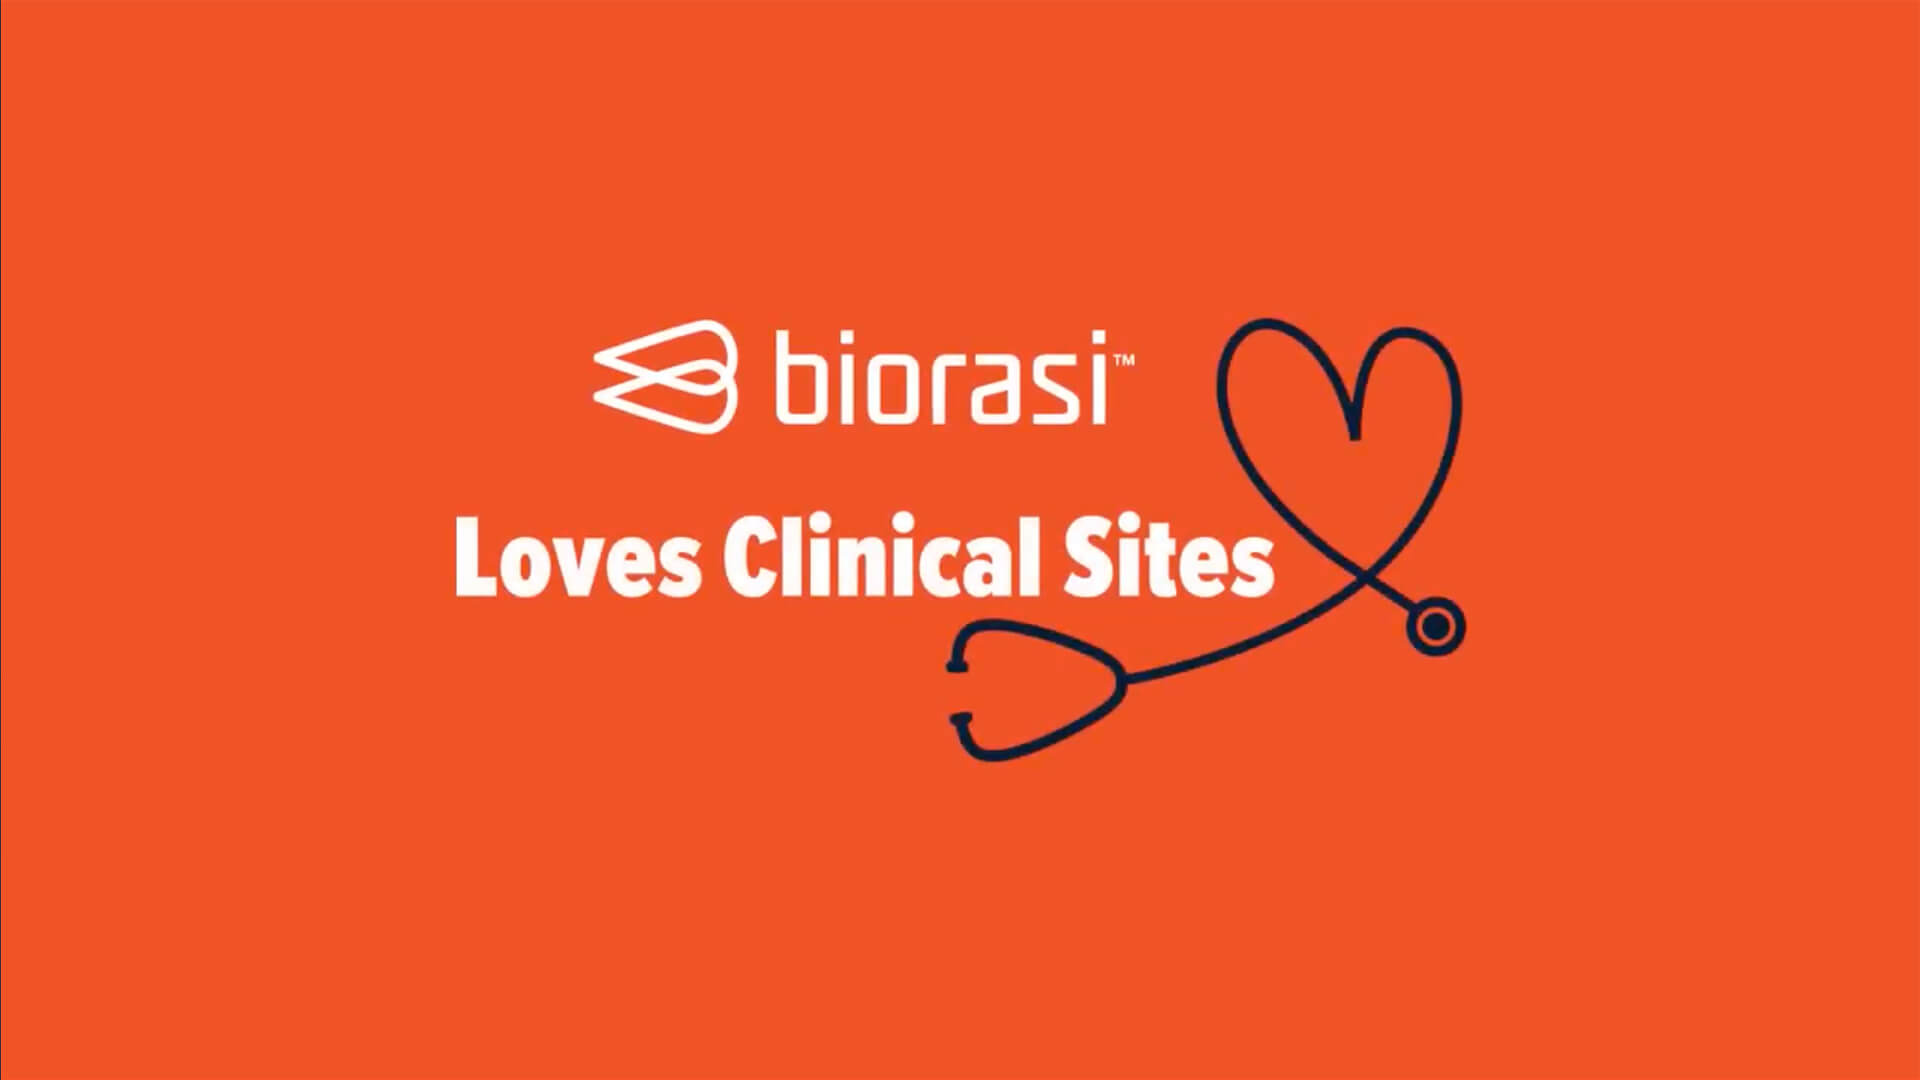 Biorasi Loves Clinical Sites poster image